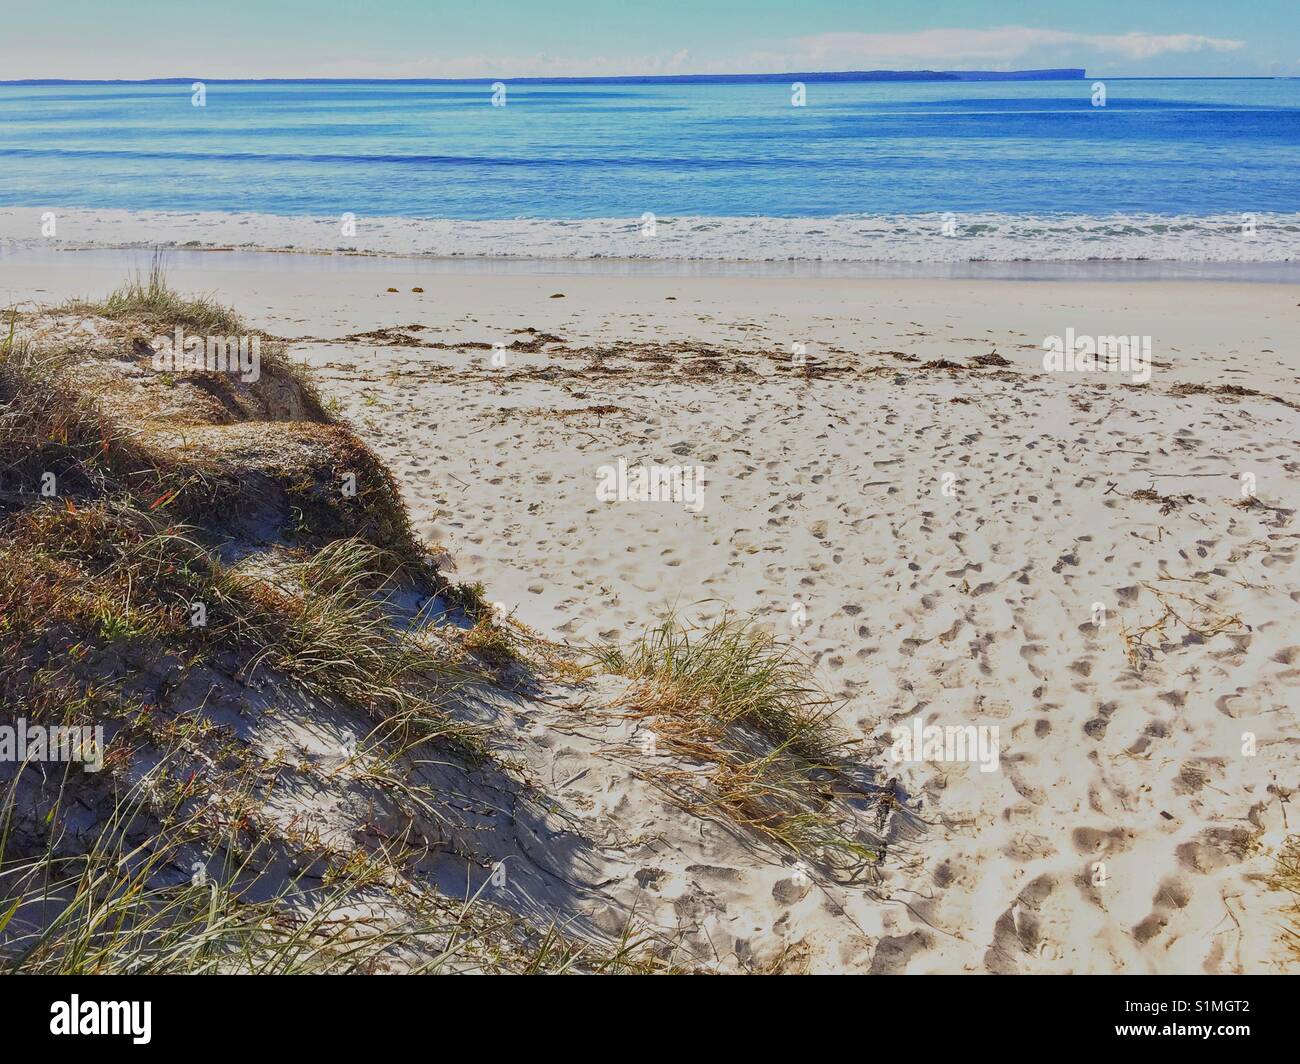 Popular holiday destination. Collingwood beach looking across Jervis Bay to Beecroft Peninsula, NSW, Australia Stock Photo